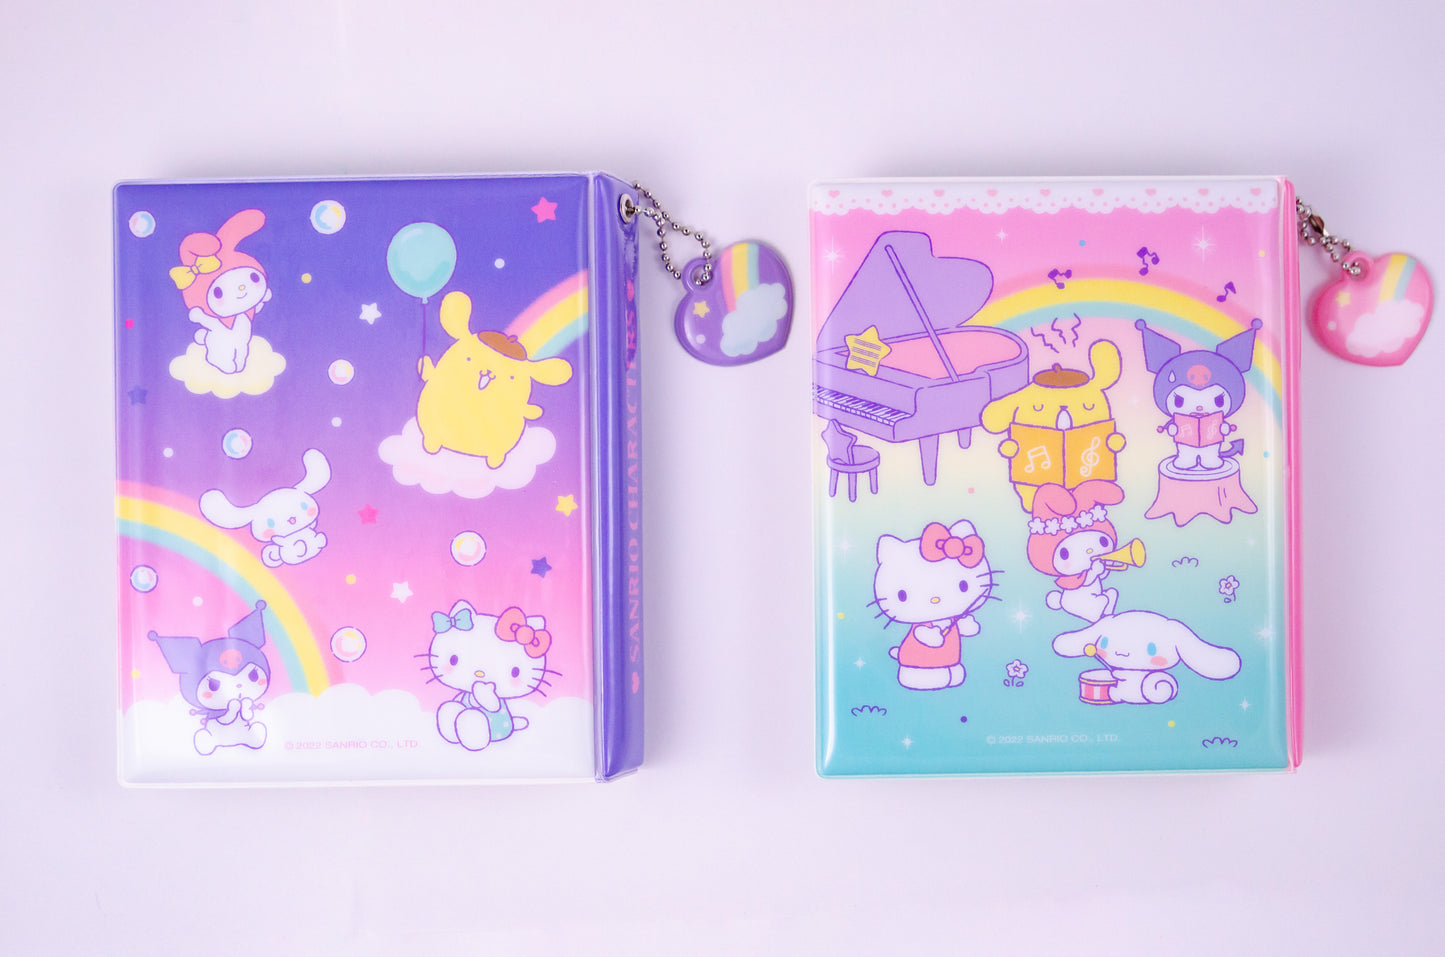 [SanrioKorea] Sanrio Characters Collect Book (2 colors)